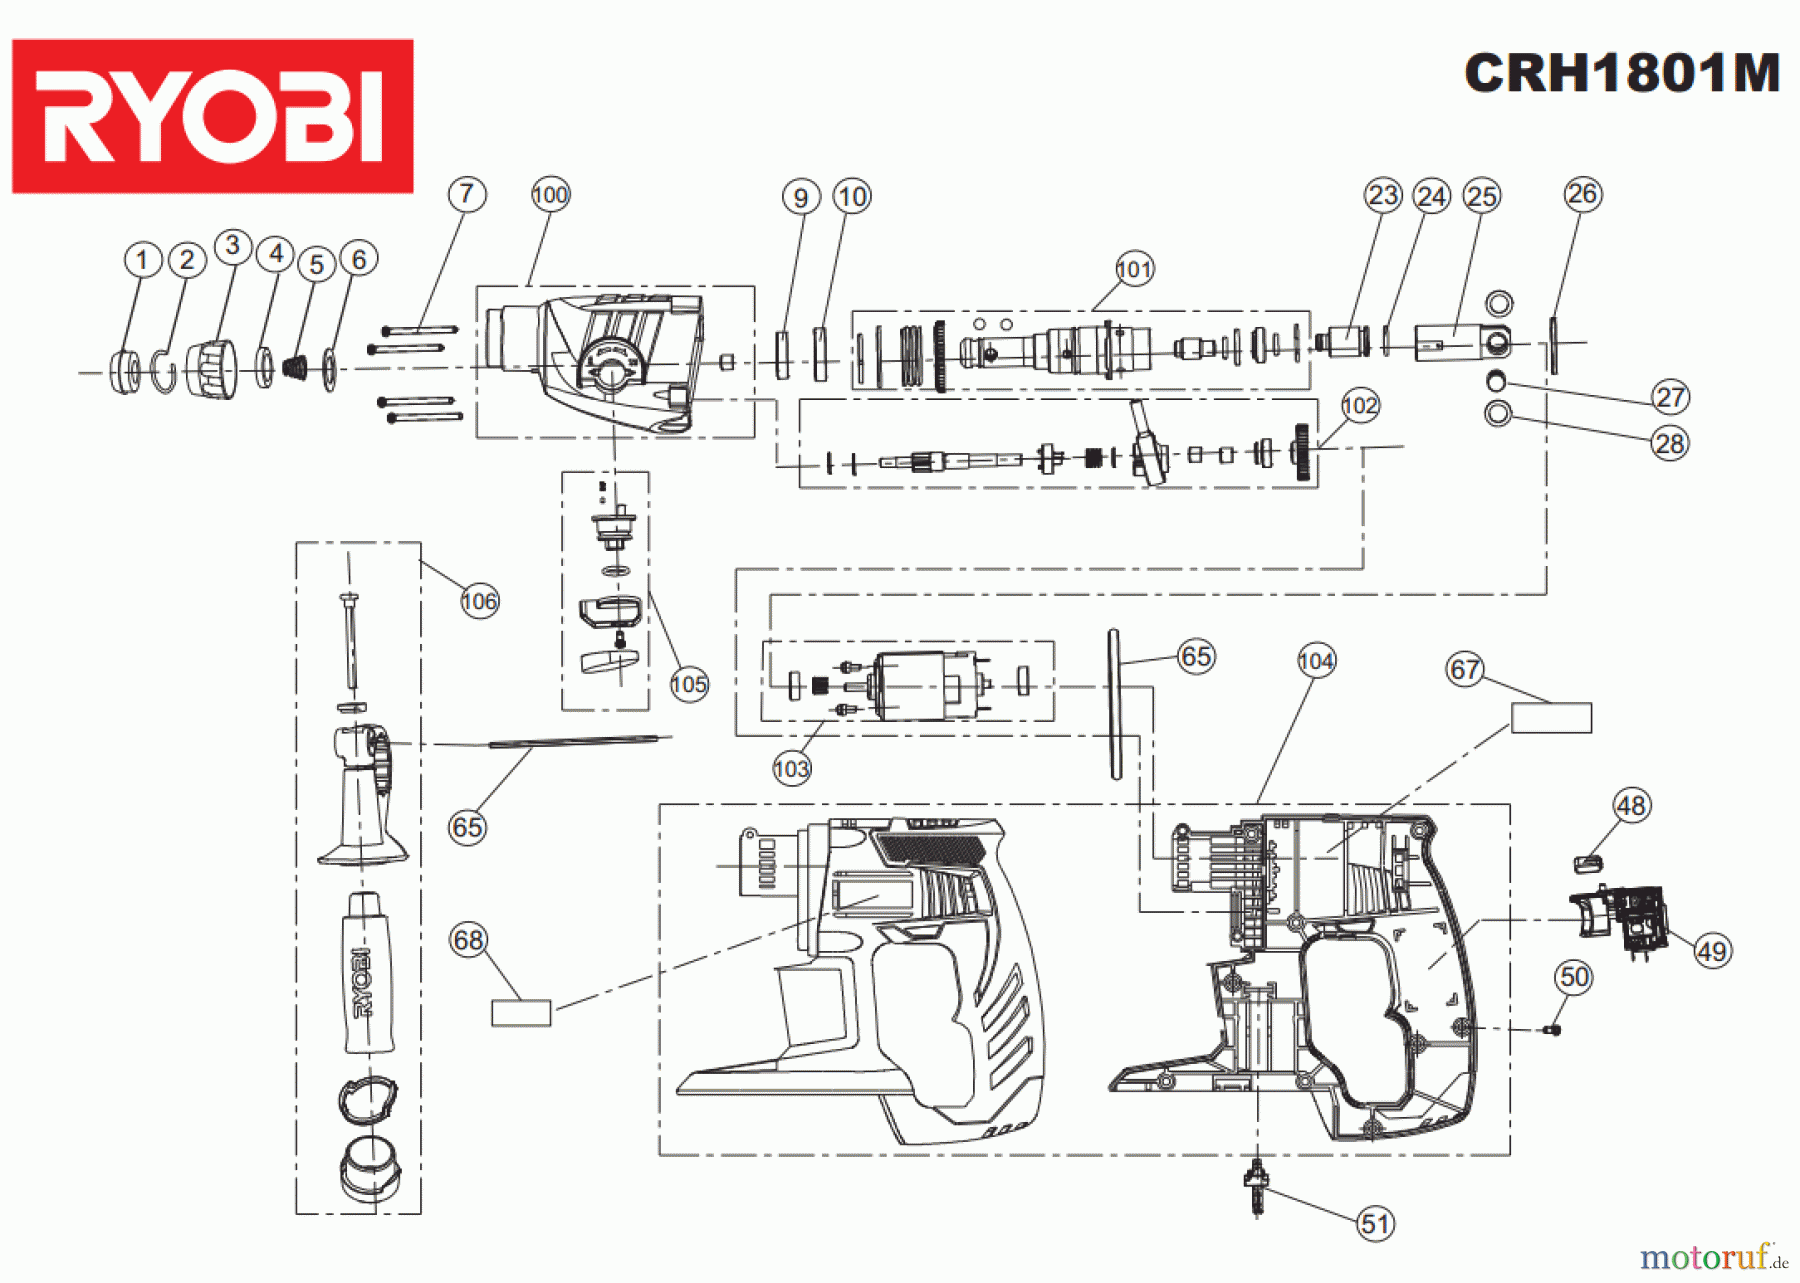  Ryobi (Schlag-)Bohrschrauber Bohrhämmer CRH1801M